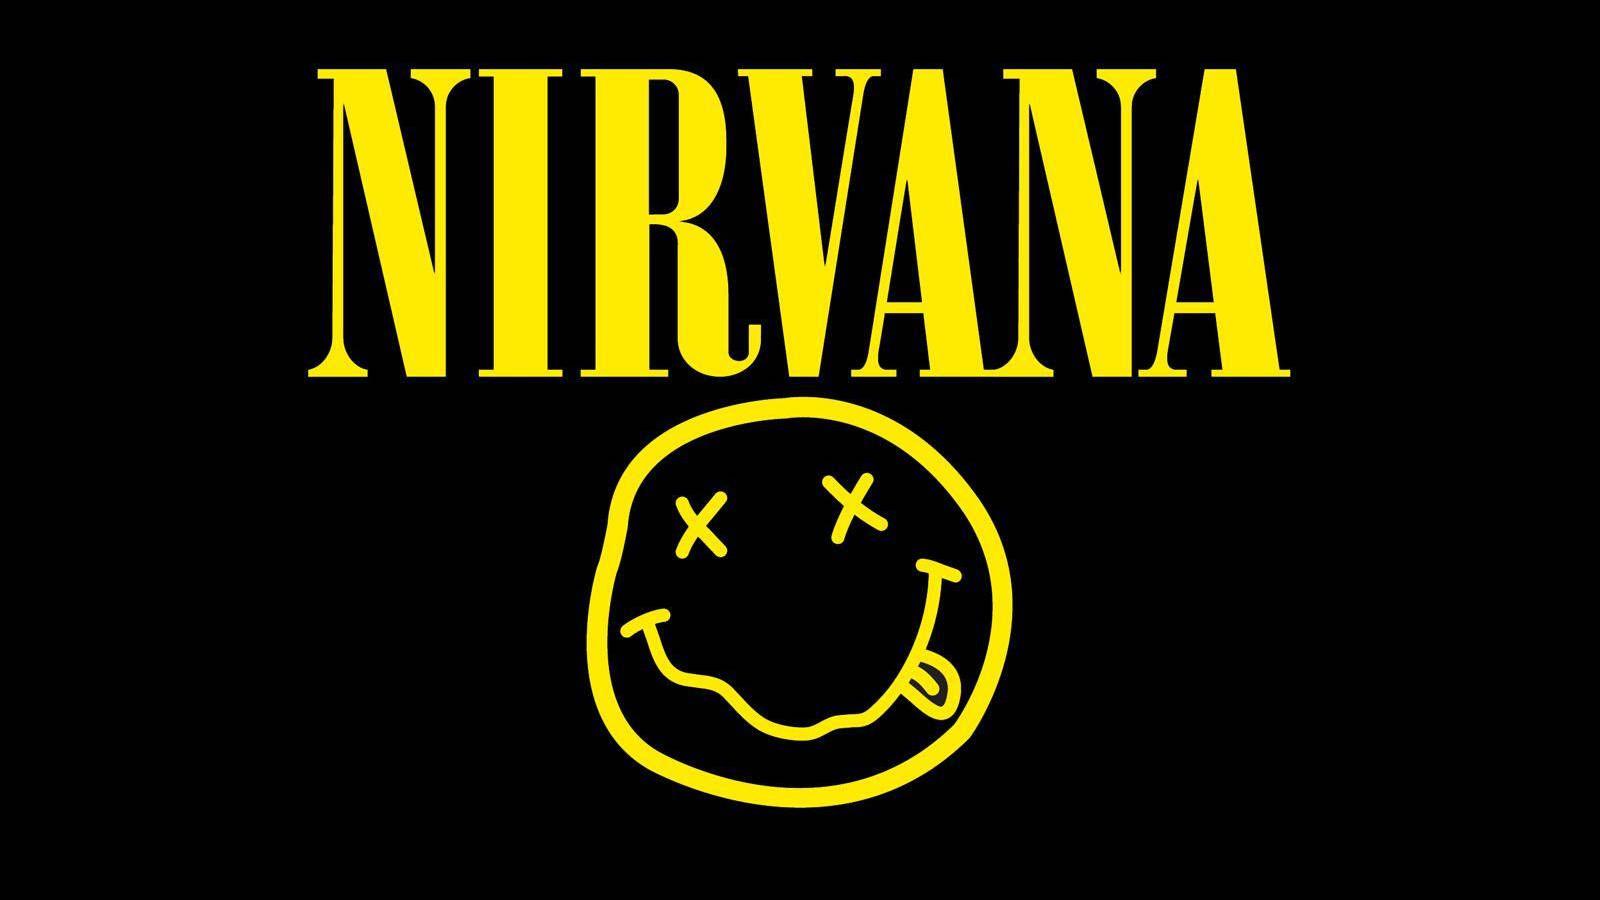 Nirvanna Logo - What Does The Nirvana Smiley Face Logo Mean?